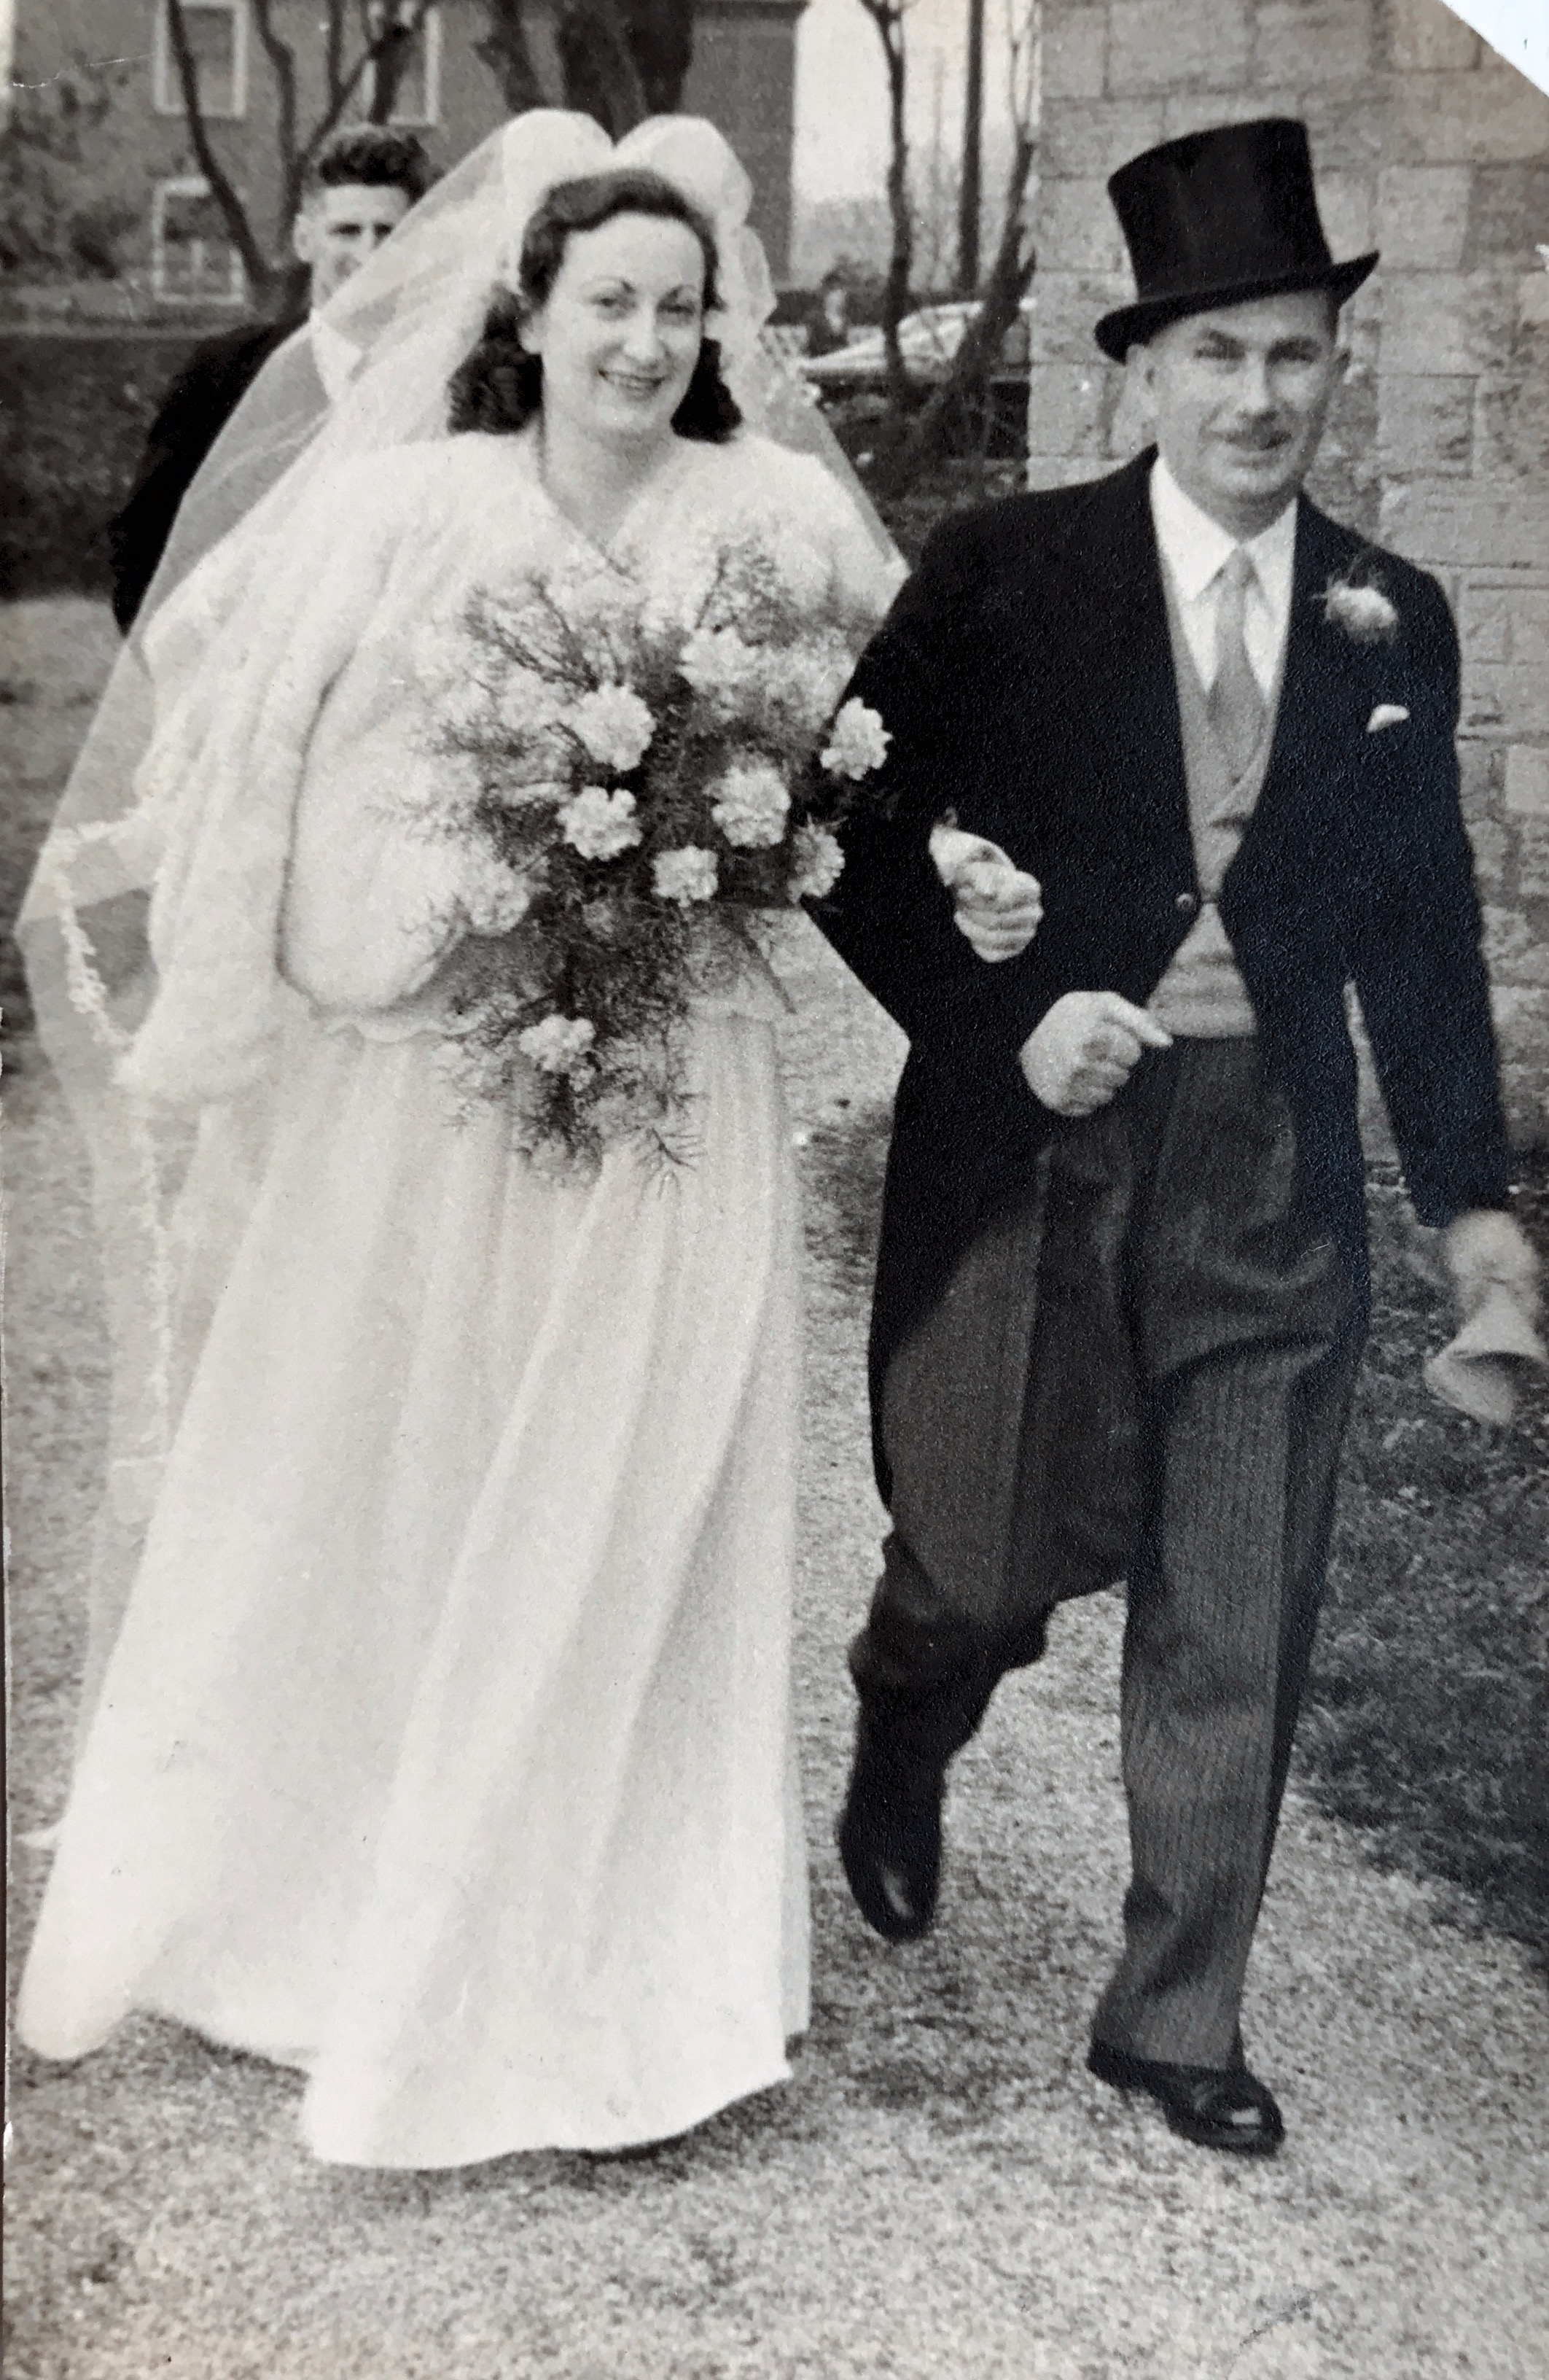 My parents wedding 10th January 1948